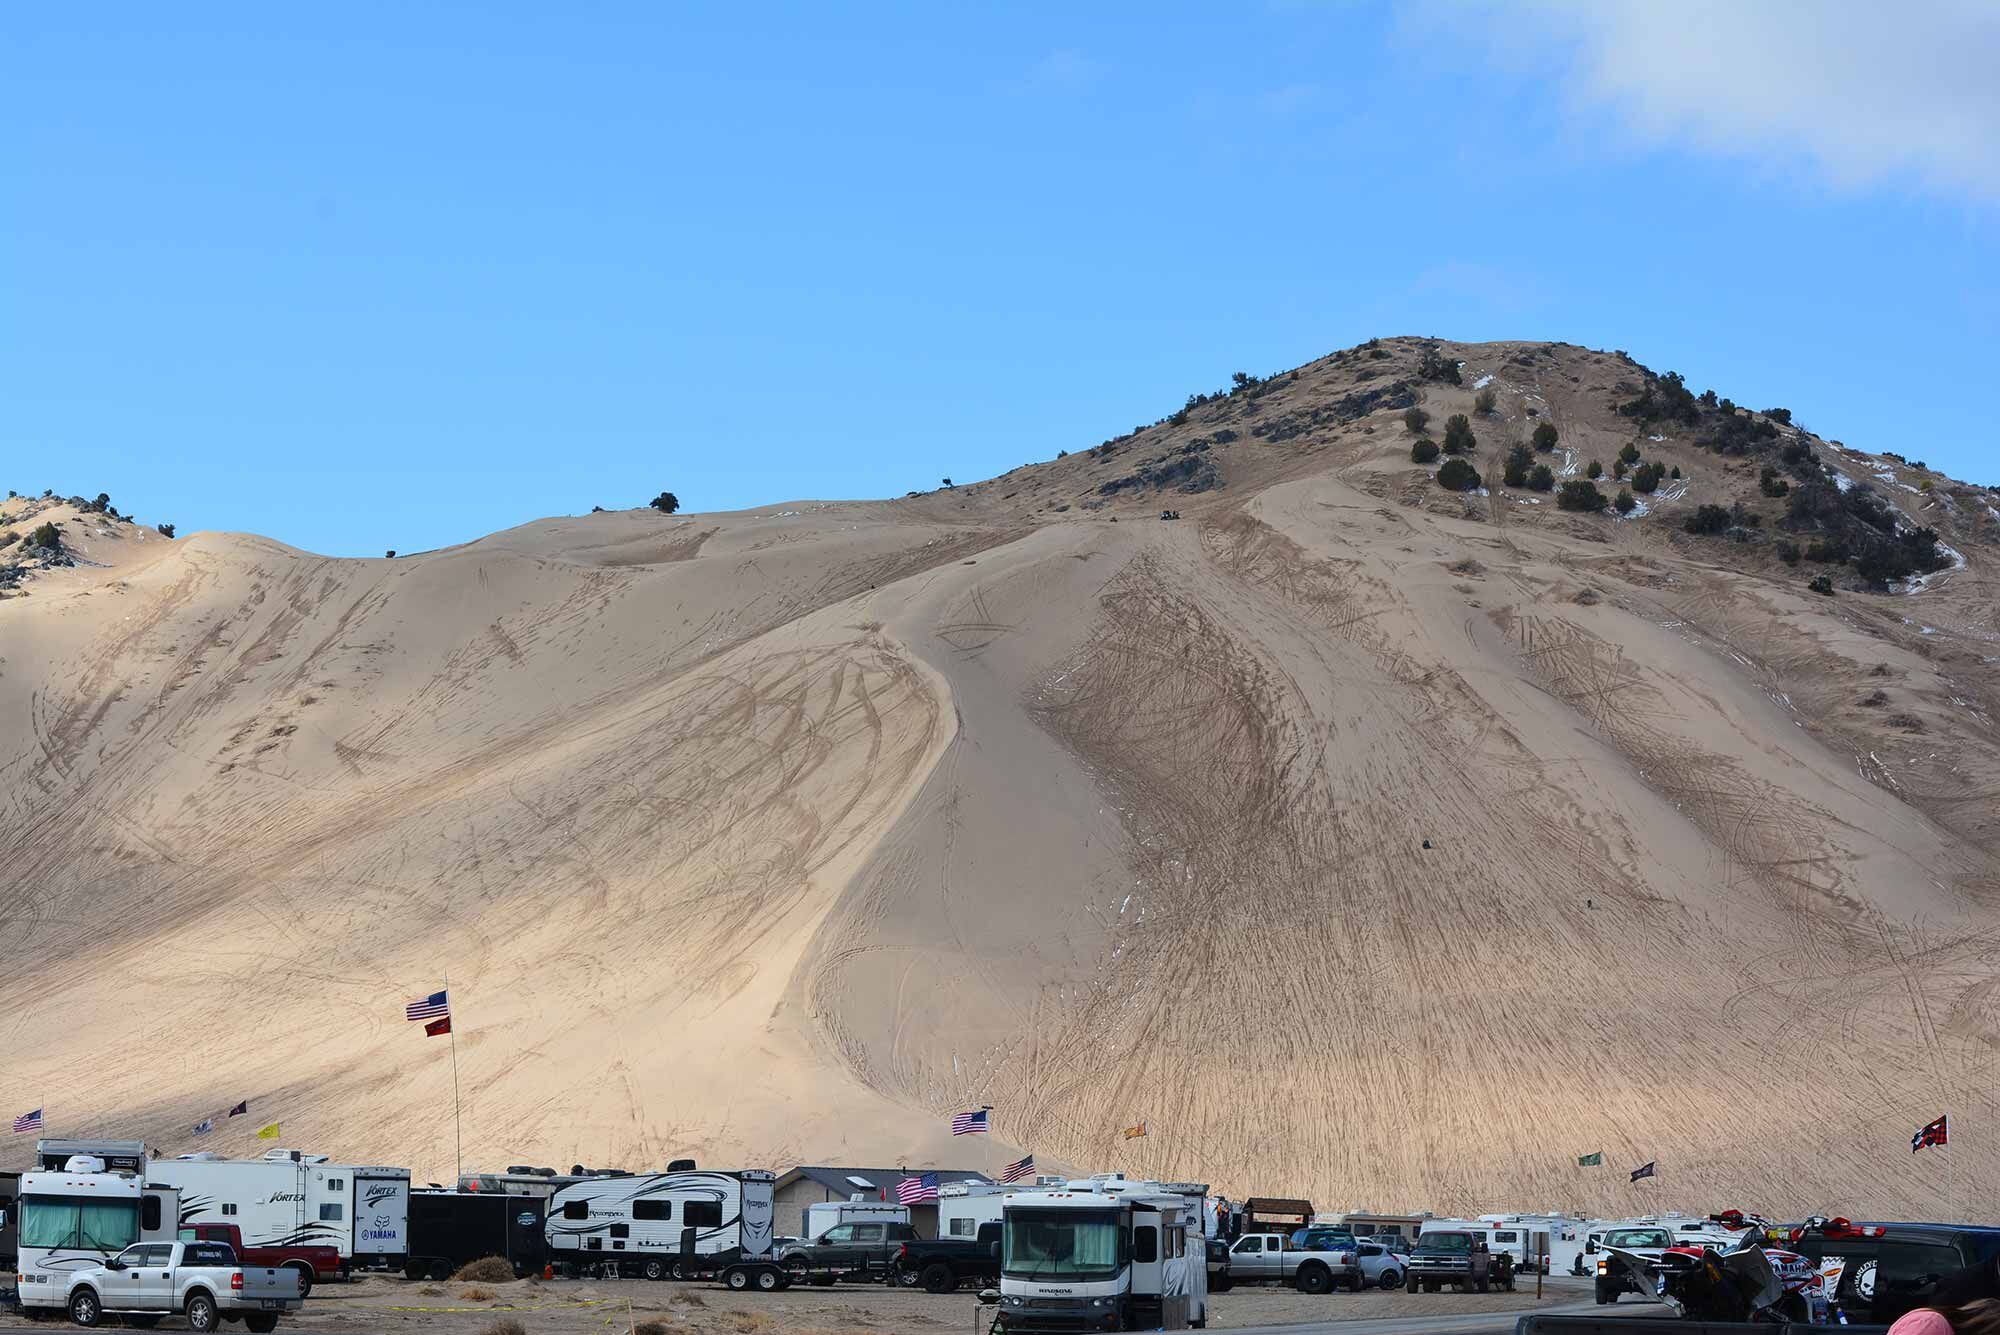 Massive hills at the Little Sahara Recreation Area.